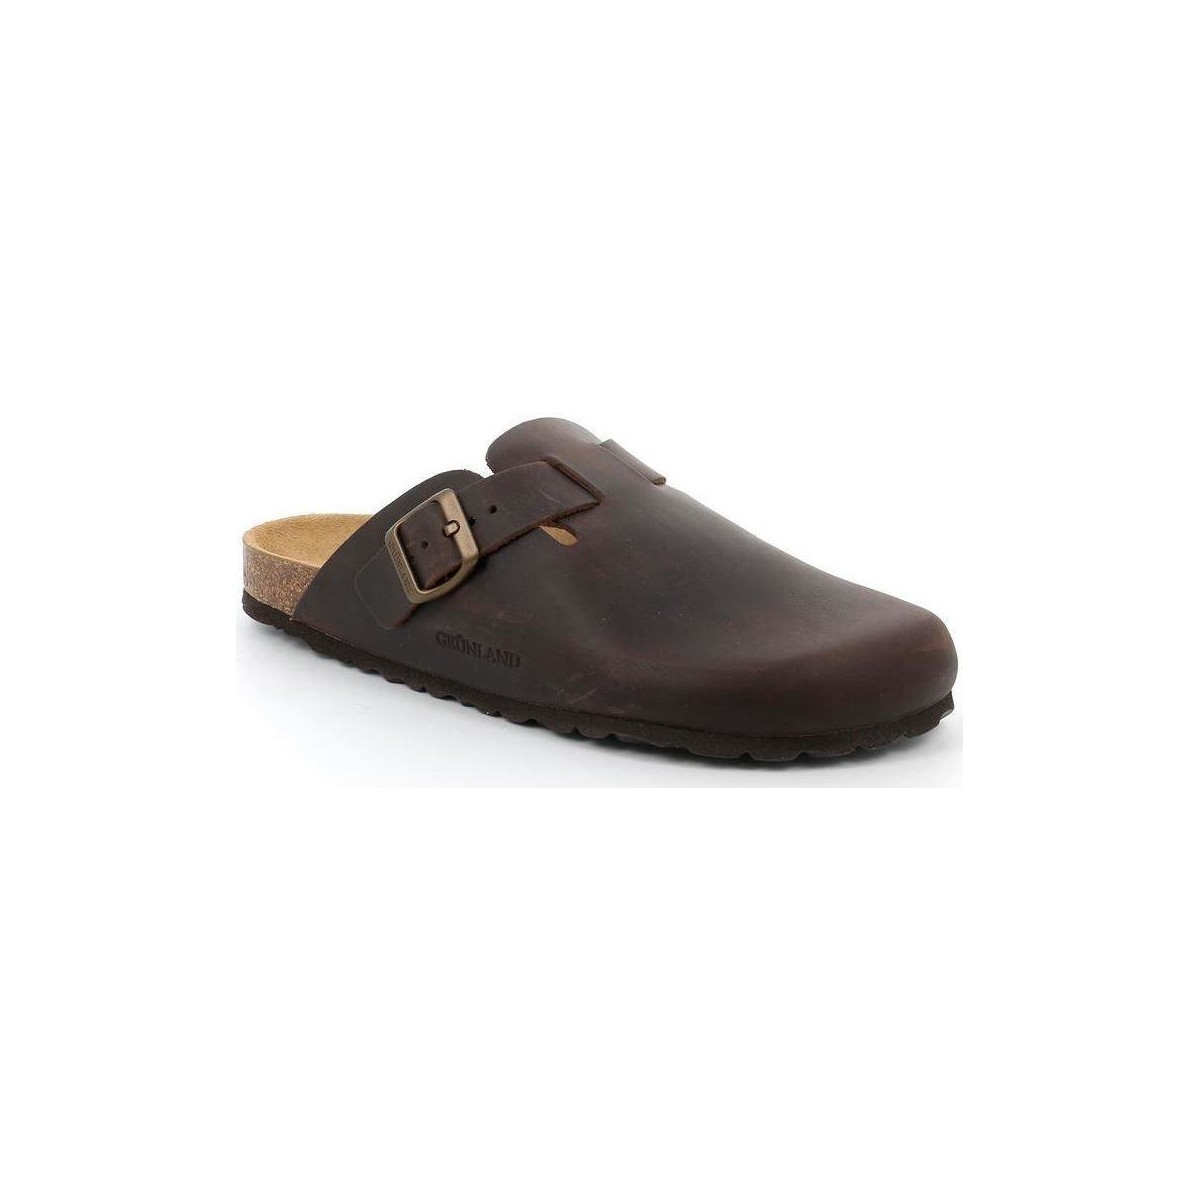 Schoenen Heren Leren slippers Grunland DSG-CB7034 Brown